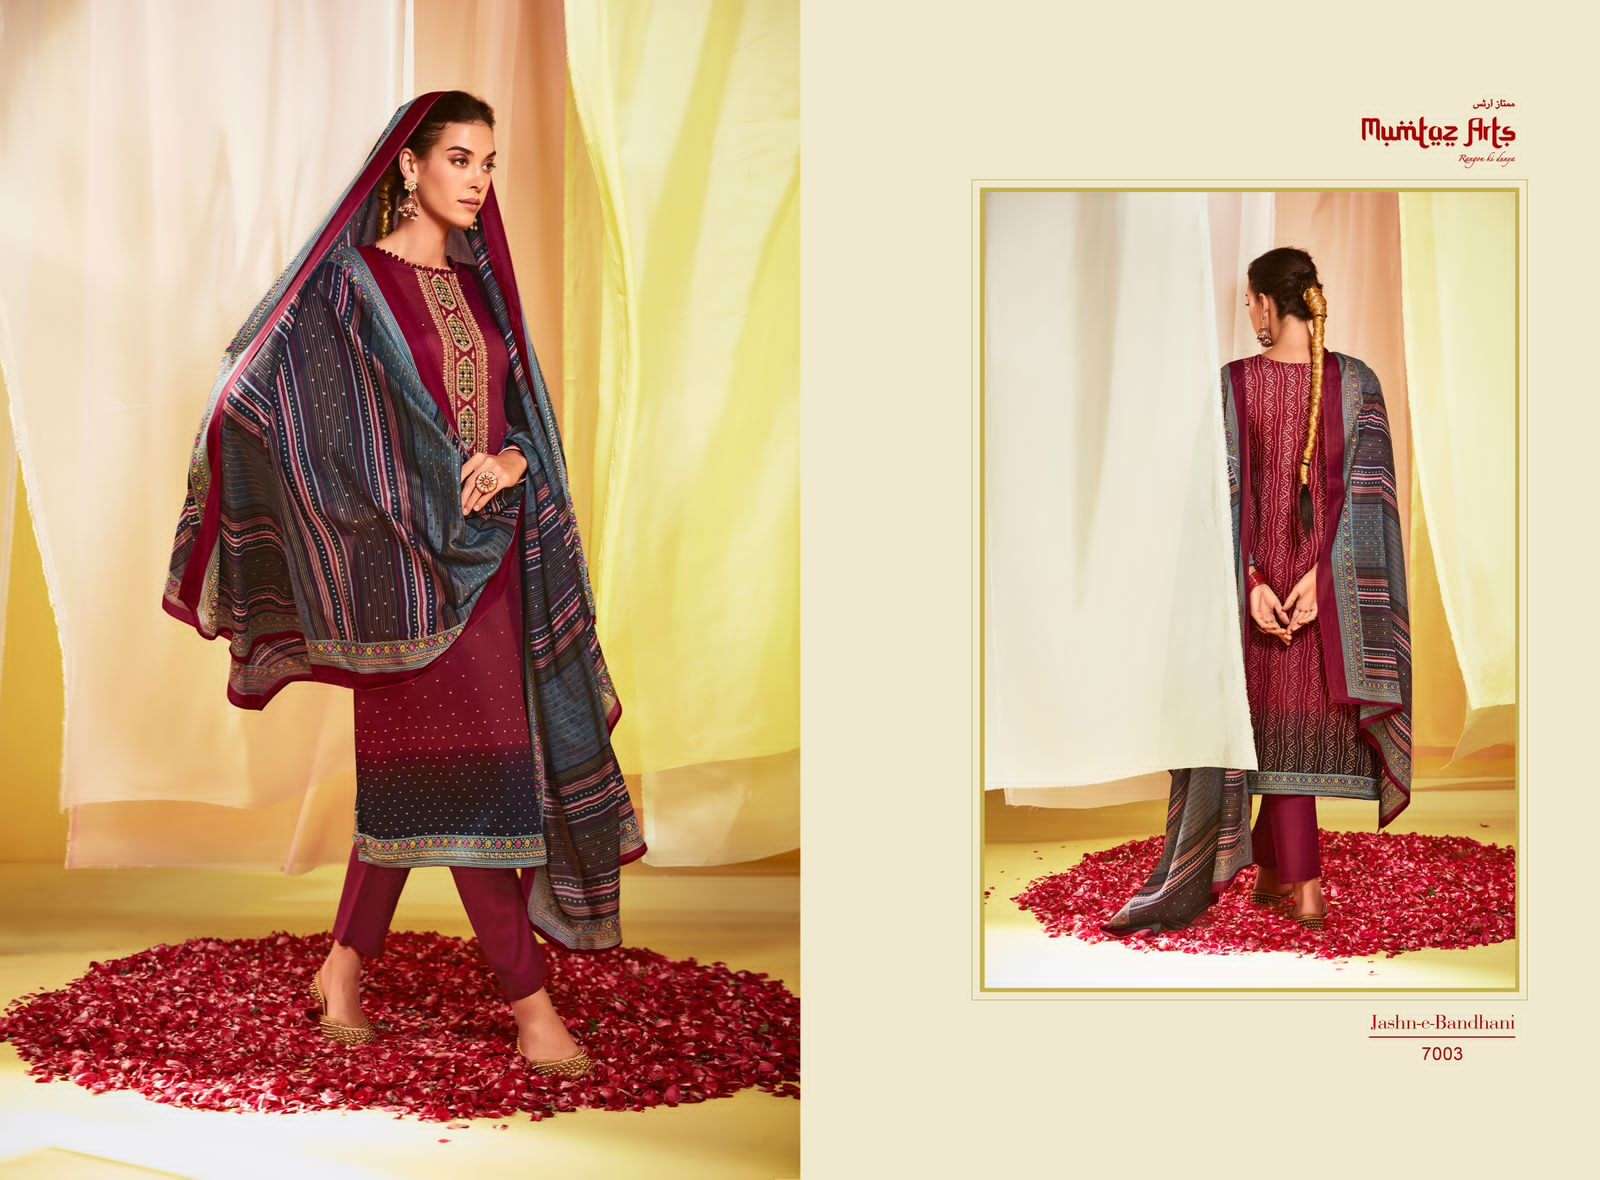 mumtaz arts jashn e bandhani vol-3 7001-7008 series fancy designer top bottom with dupatta latest catalogue surat